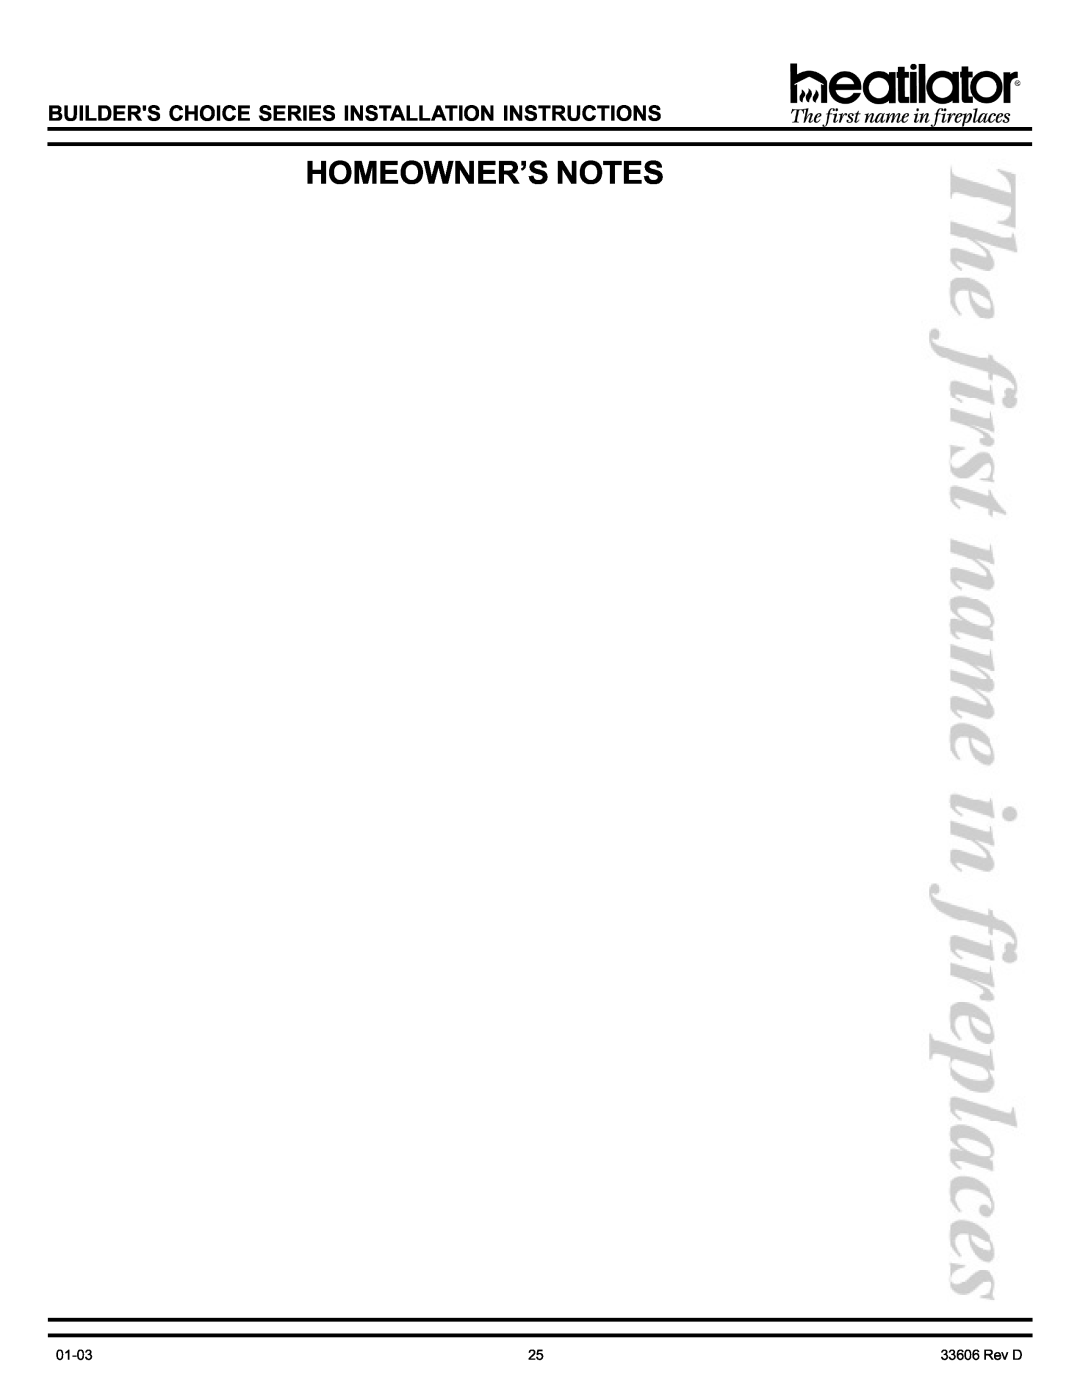 Heatiator BCDV36 manual Homeowner’S Notes, Builders Choice Series Installation Instructions, Rev D 